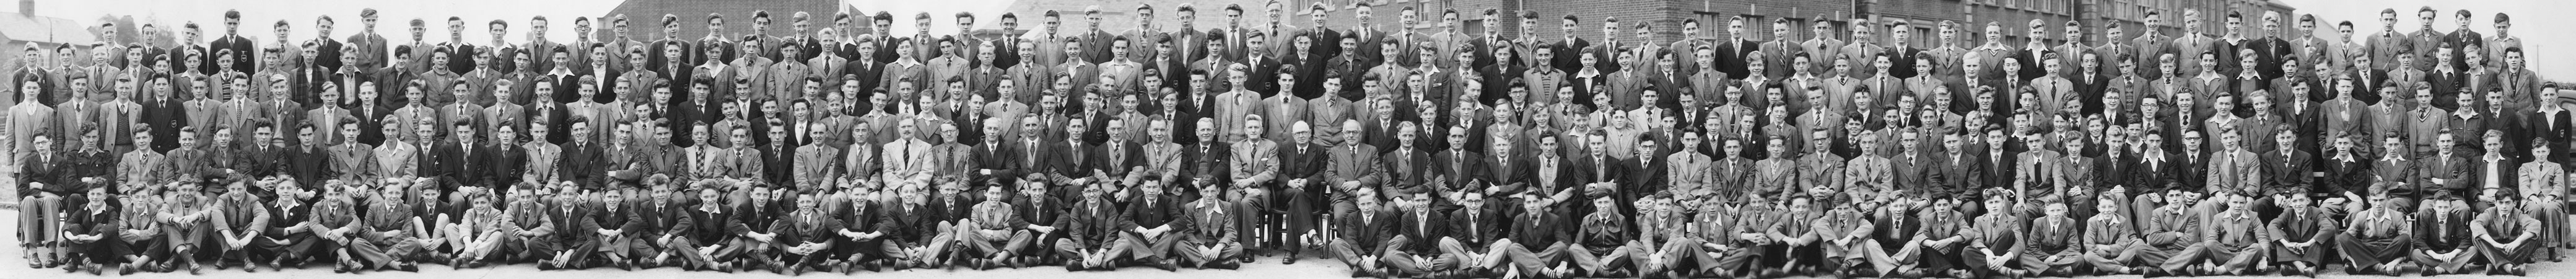 1953/4 - Seniors